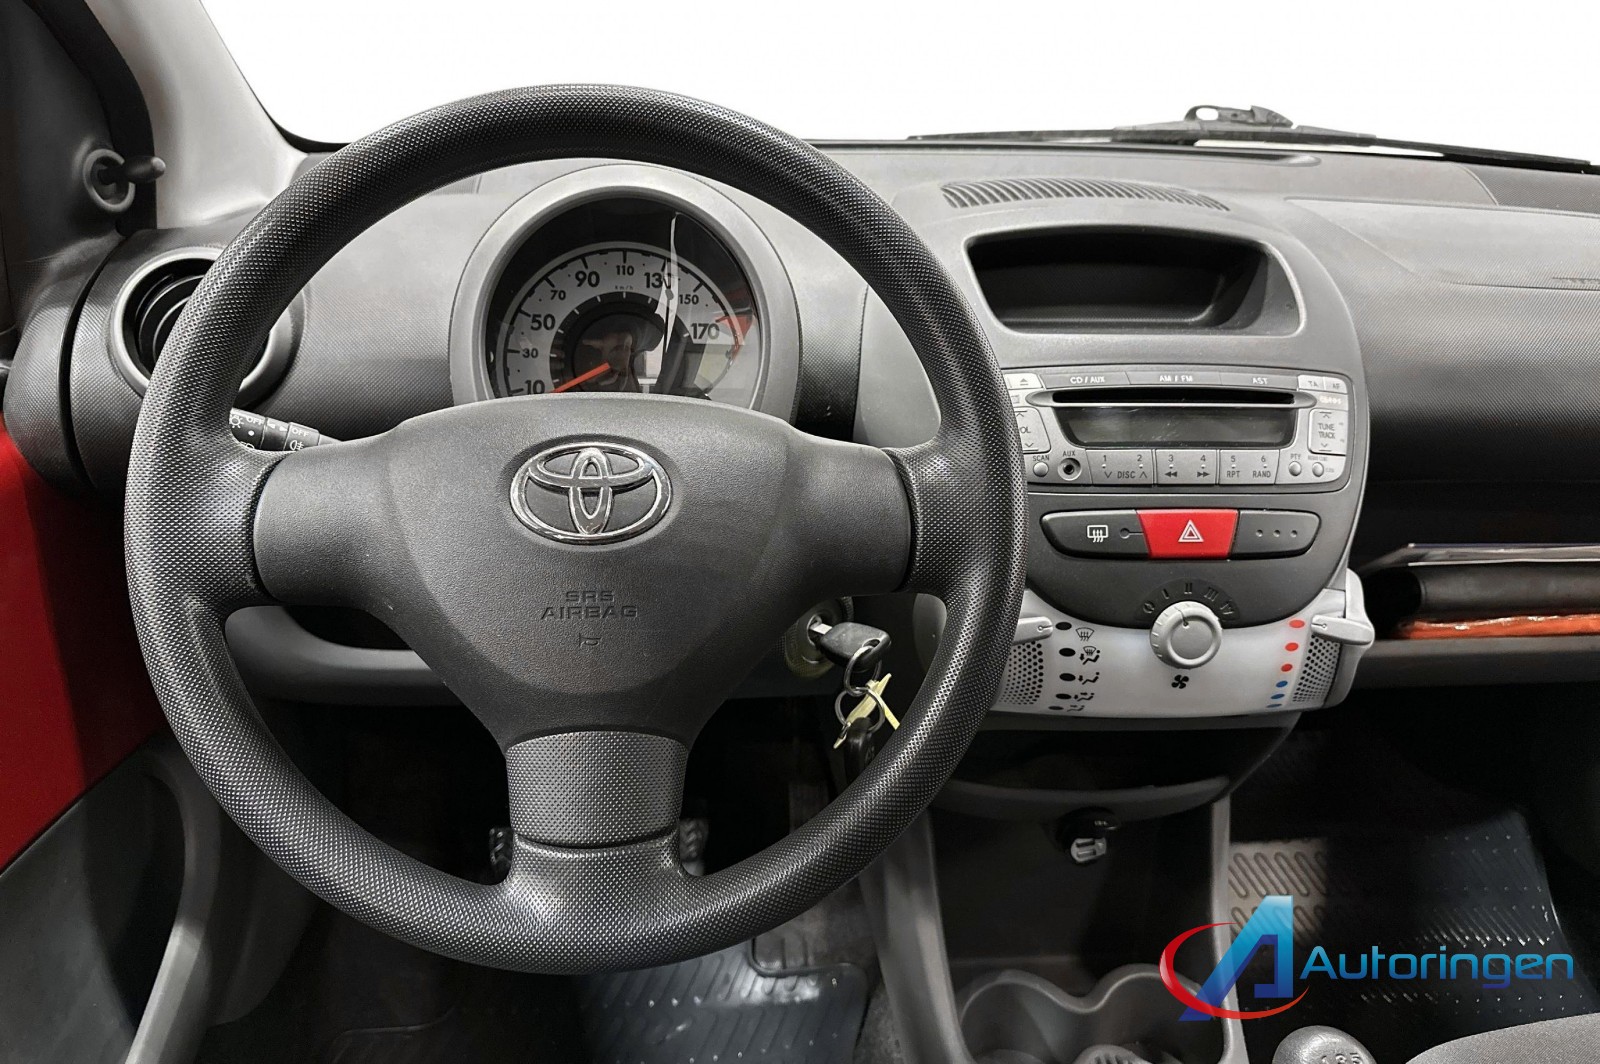 Hovedbilde av Toyota Aygo 2009